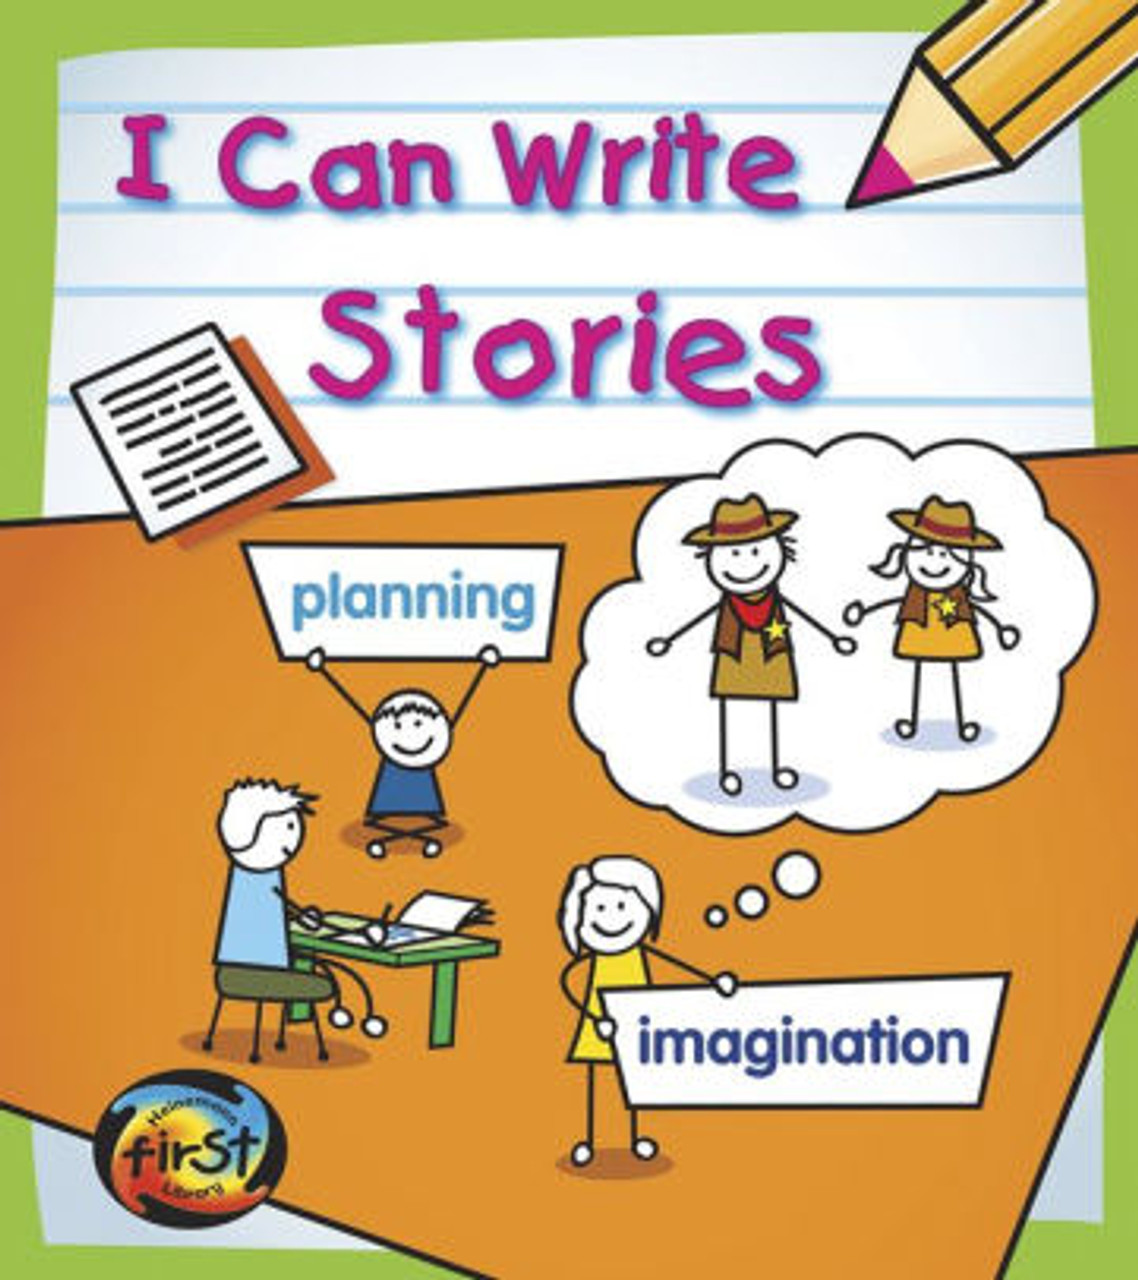 I Can Write Stories by Anita Ganeri